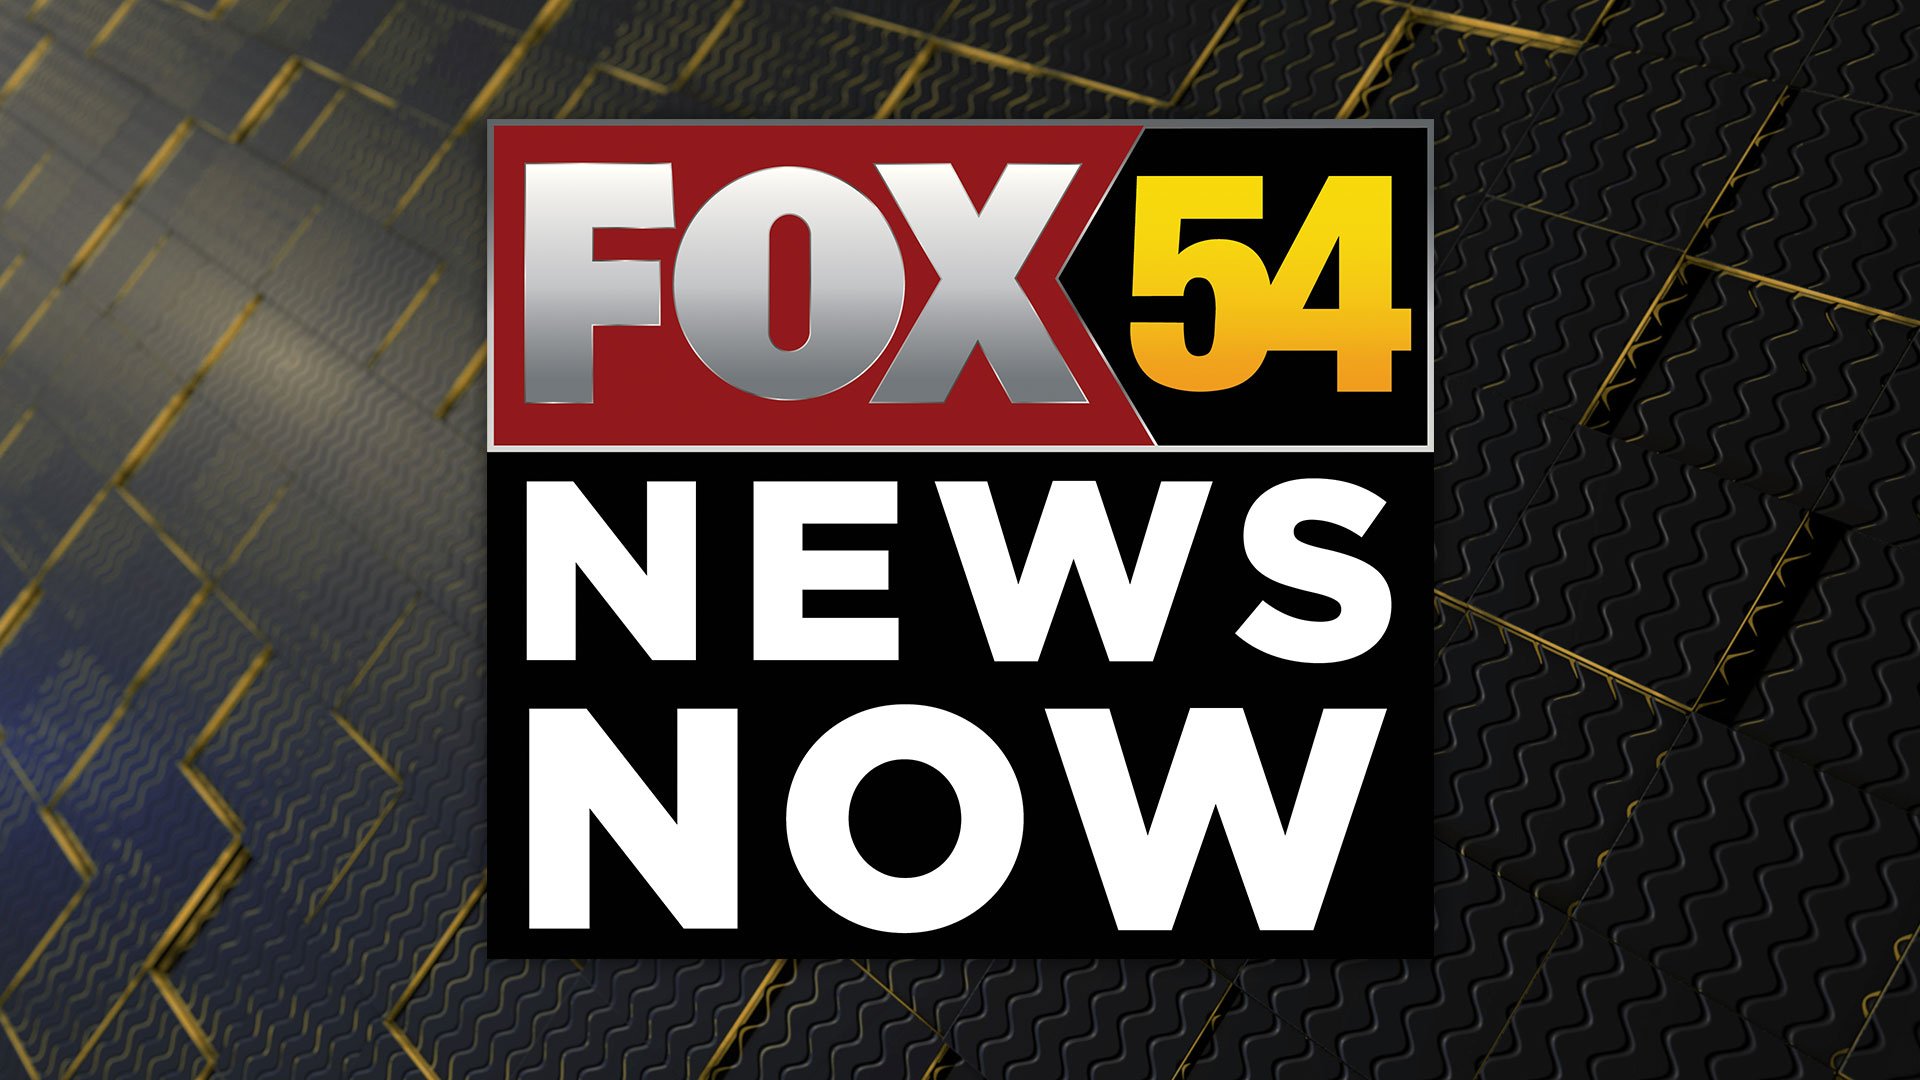 BREAKING NEWS: Body found in Aiken County - WFXG FOX 54 - News Now